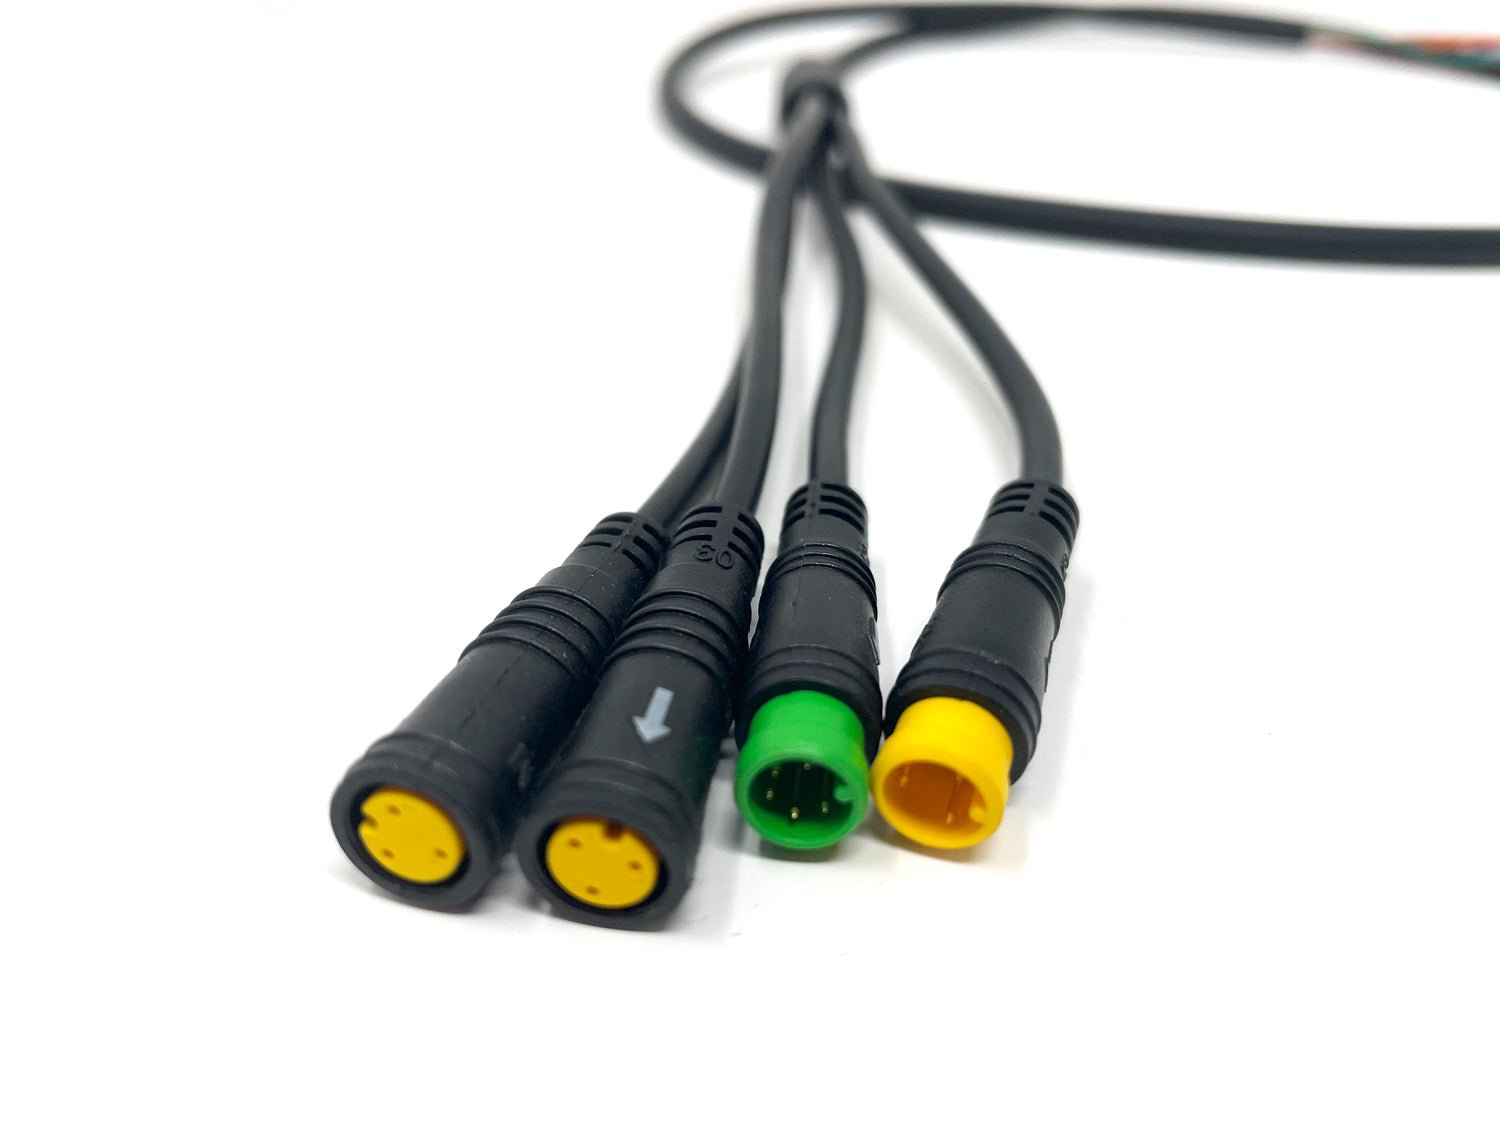 4Y Main Communication Cable For Bafang G510 Ultra Motor - Bakcou